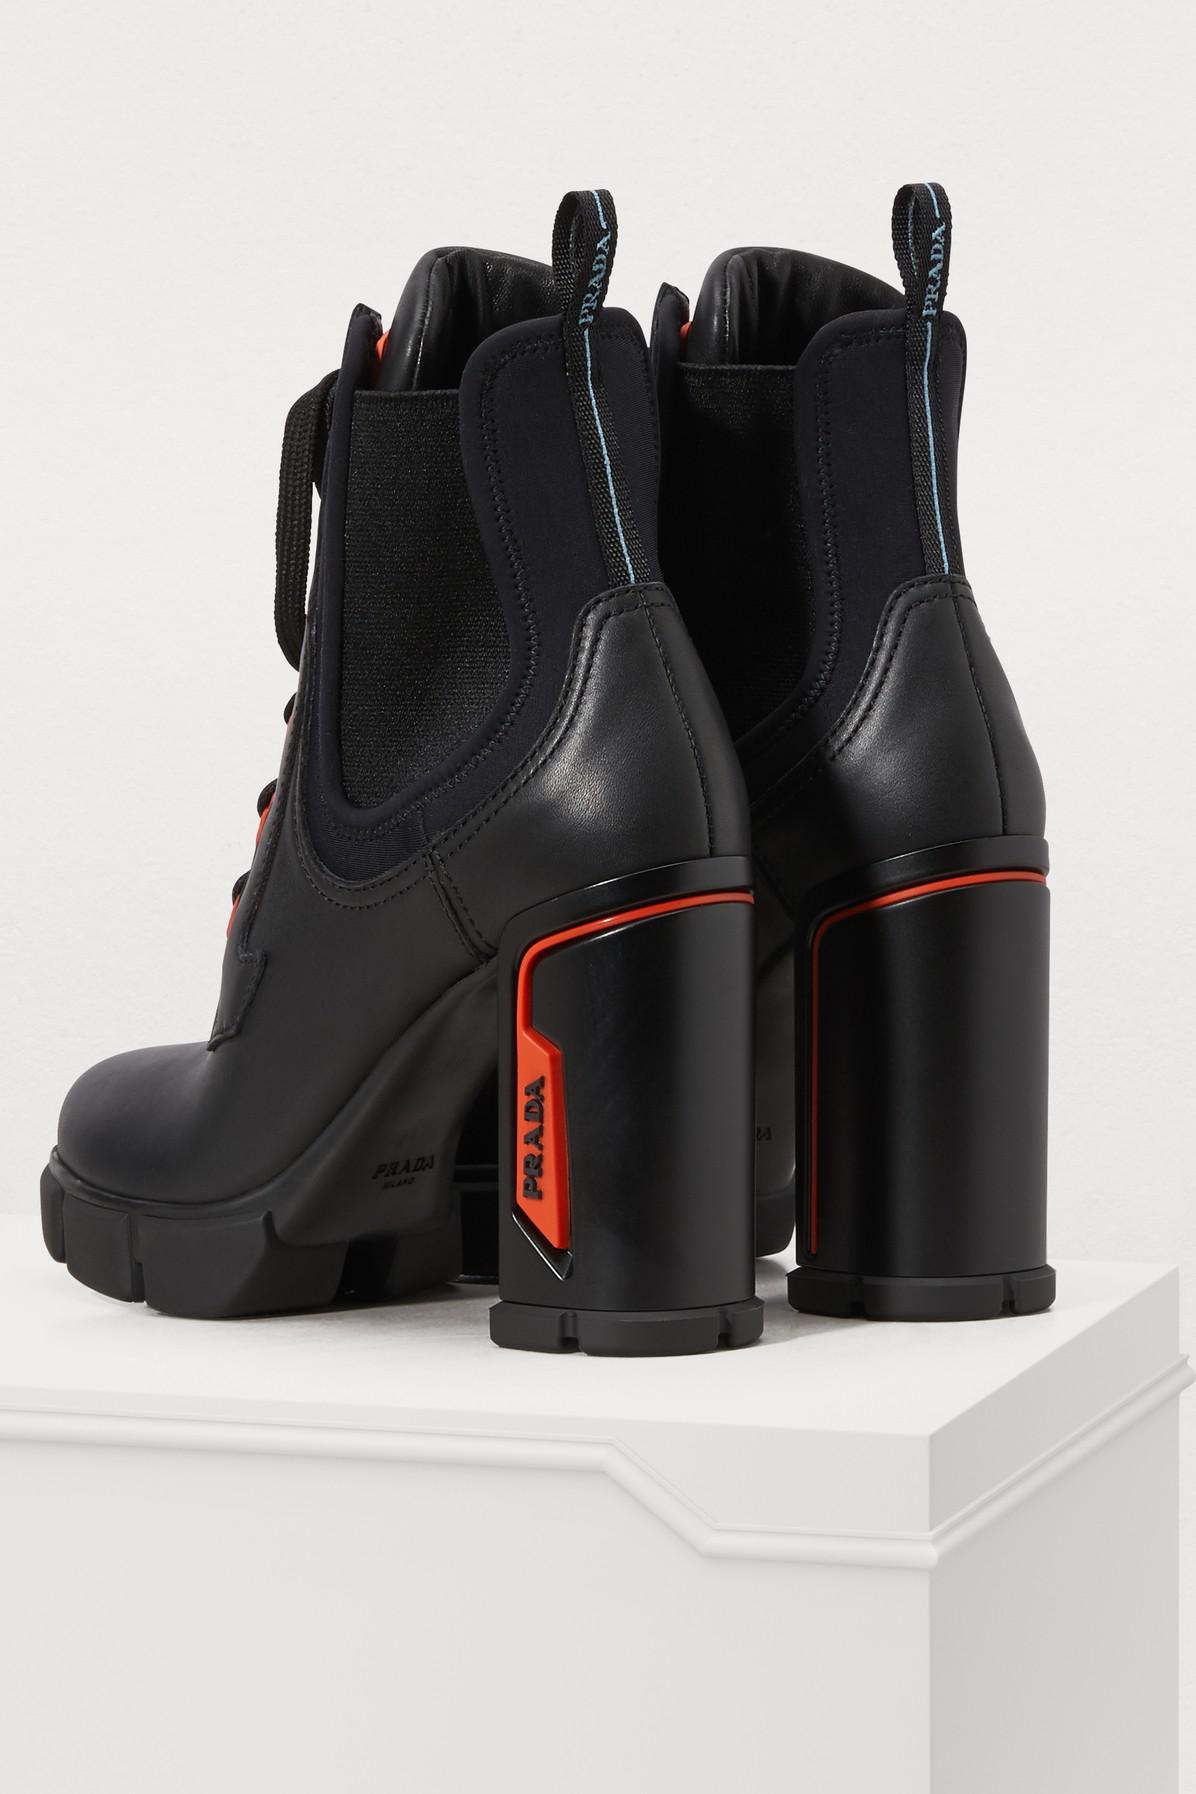 Prada Leather Ankle Boots in Black / Orange (Black) | Lyst